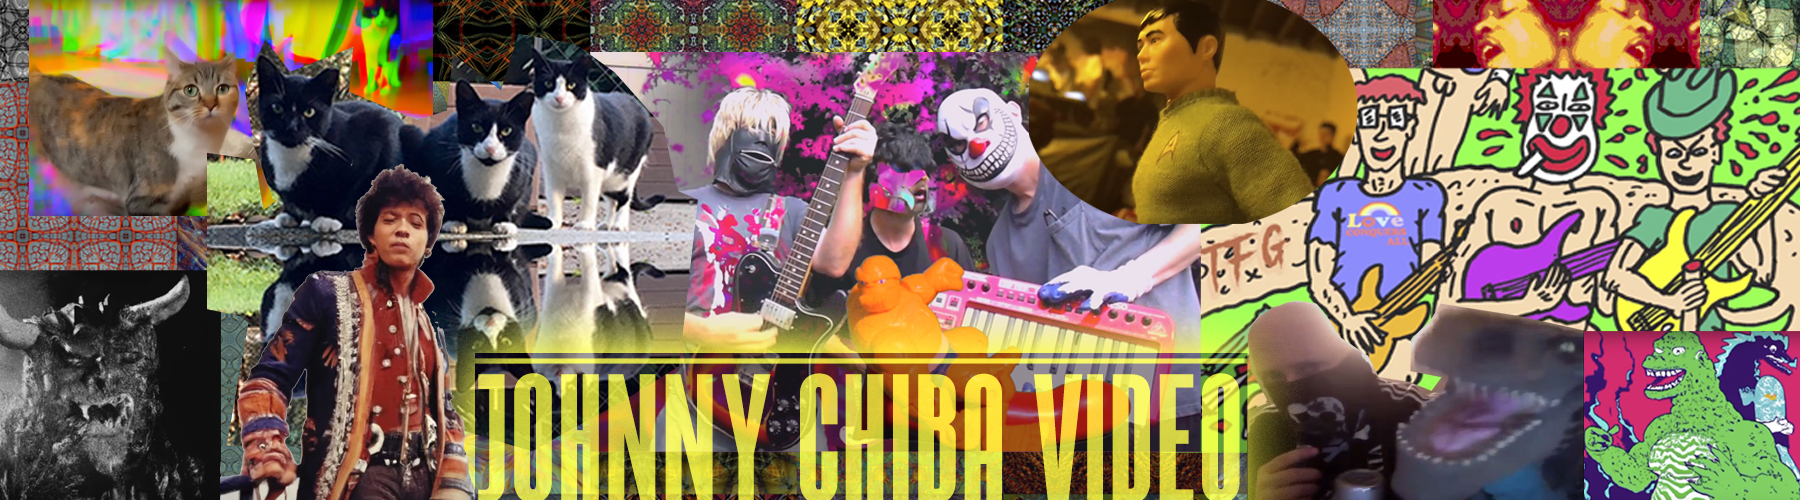 Johnny Chiba Video